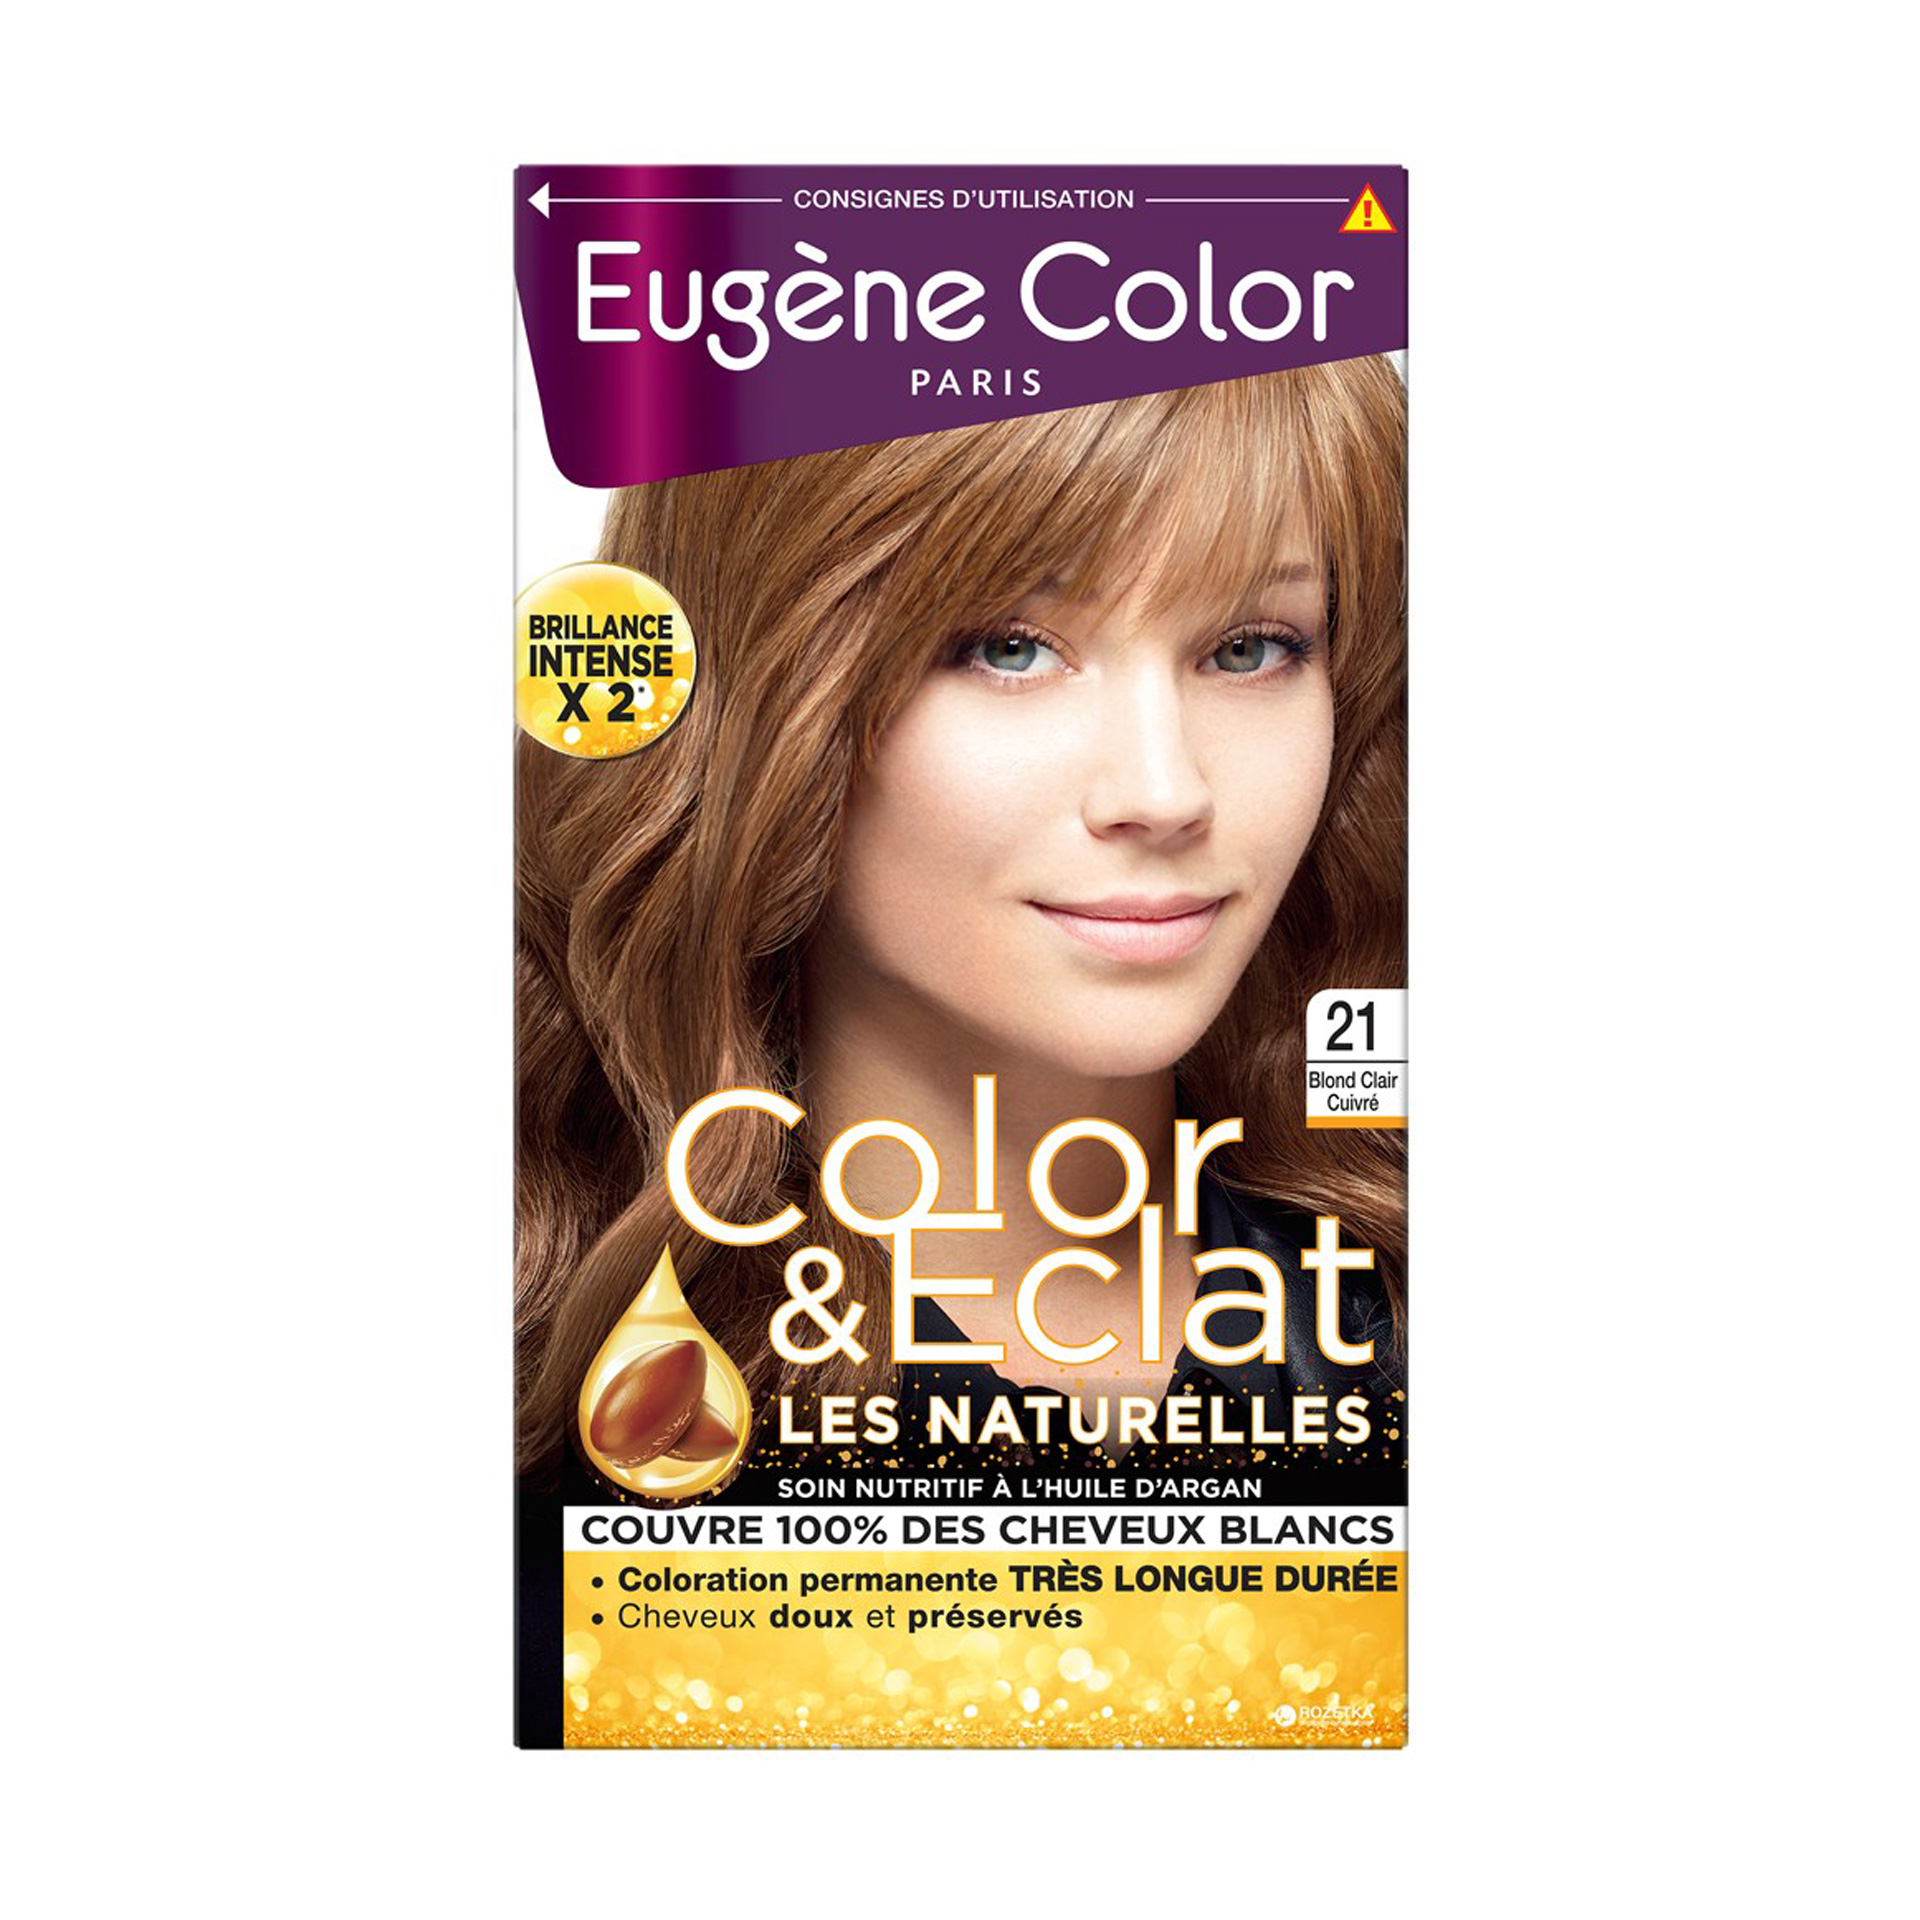 Eugene Color Color & Eclat Parlak Saçlar 21 Blond Clair Cuivre Boya